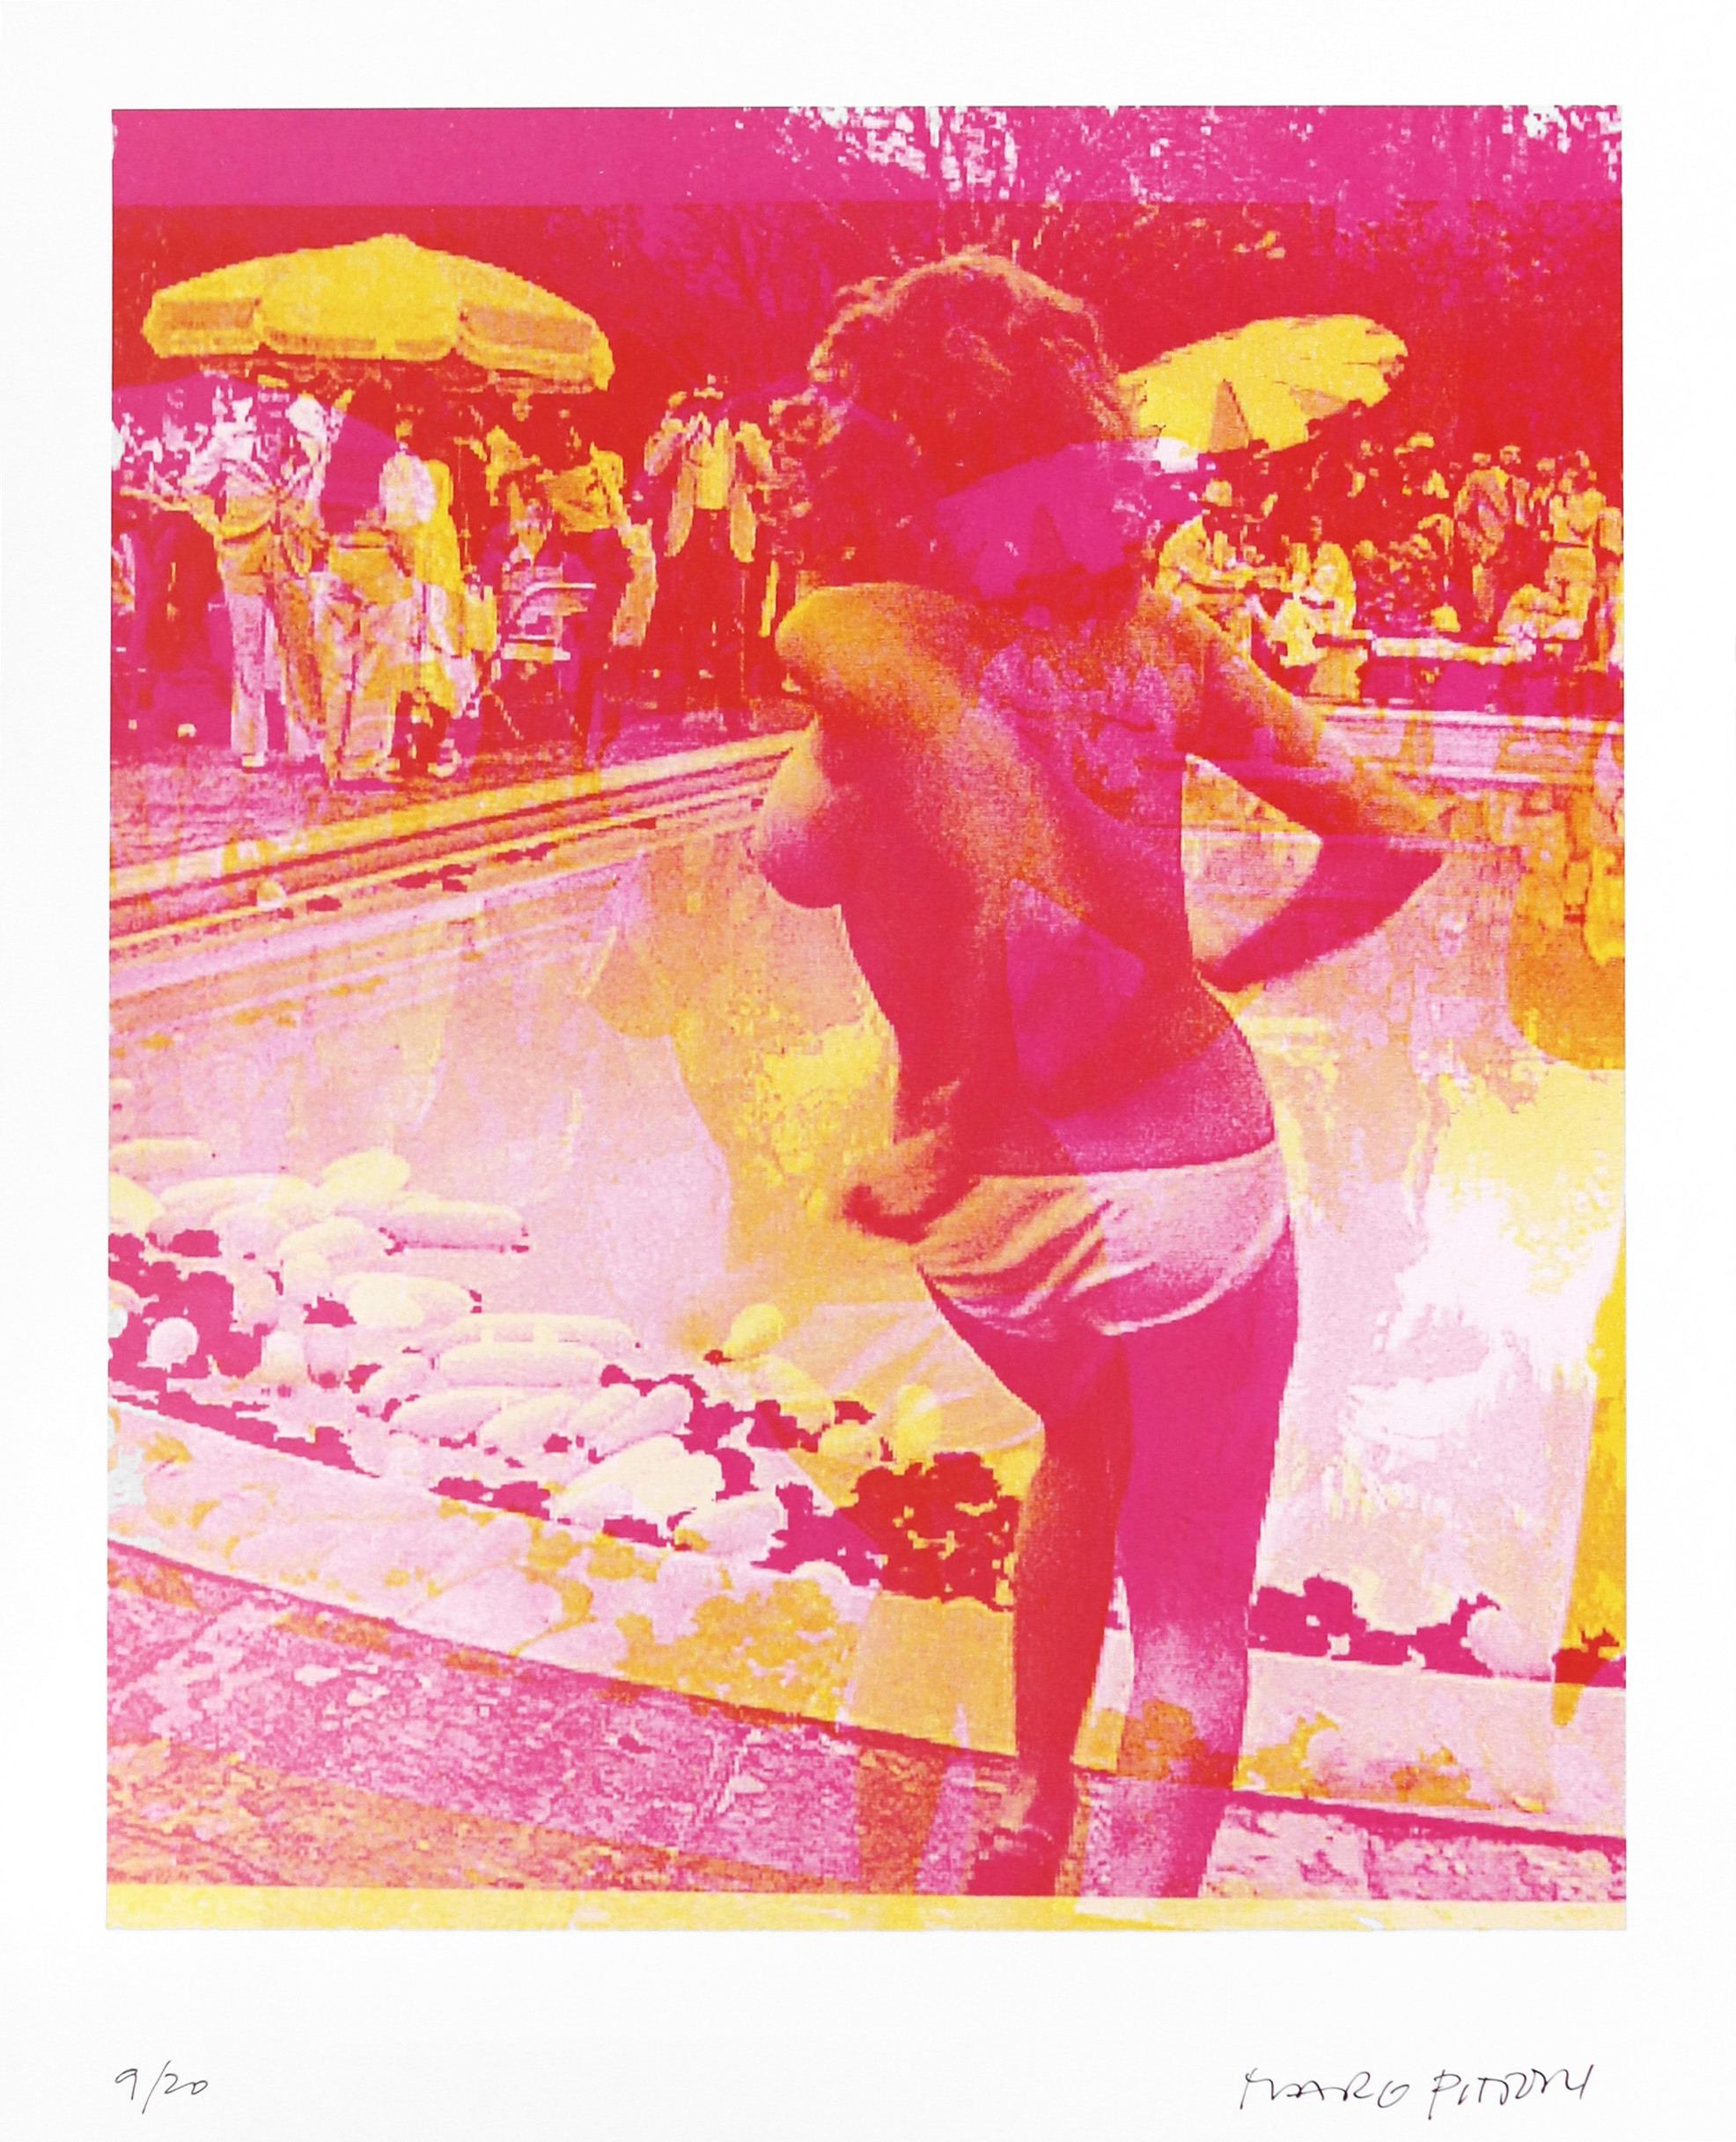 Marco Pittori Figurative Photograph - Swimming Pool Pink AP (9/20)